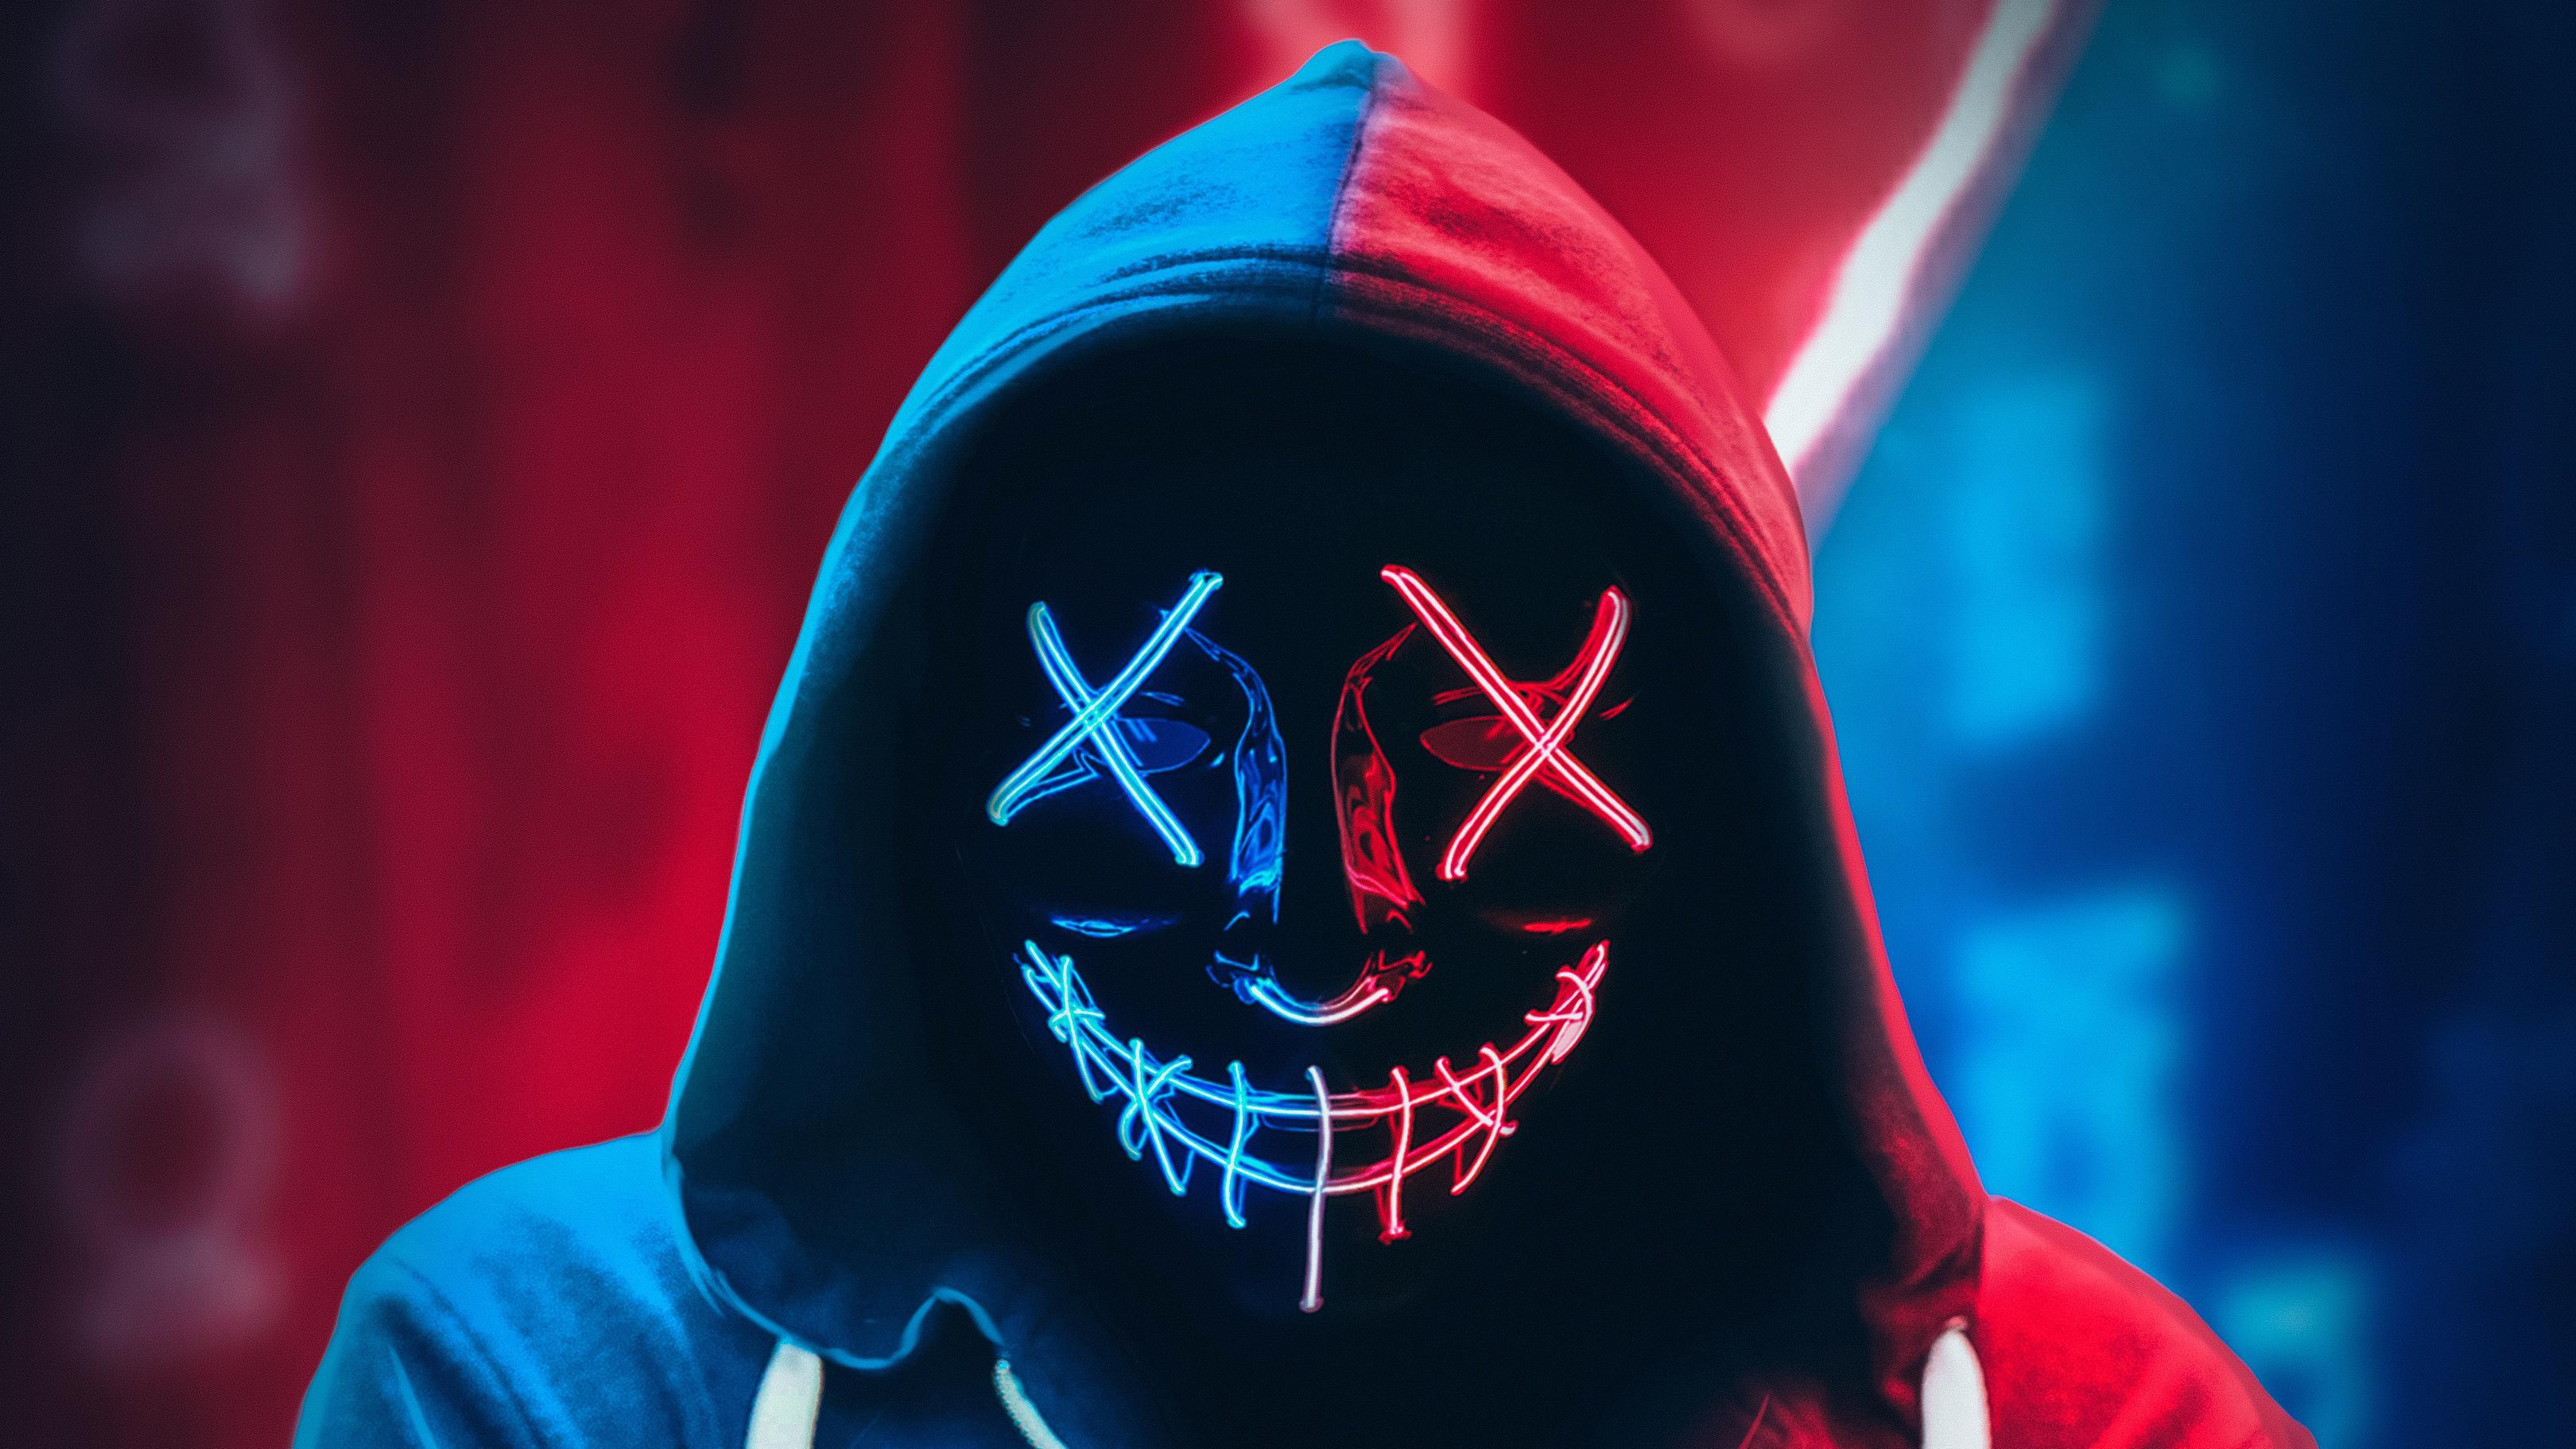 Neon Mask Hoodie 4k, HD Photography, 4k Wallpaper, Image